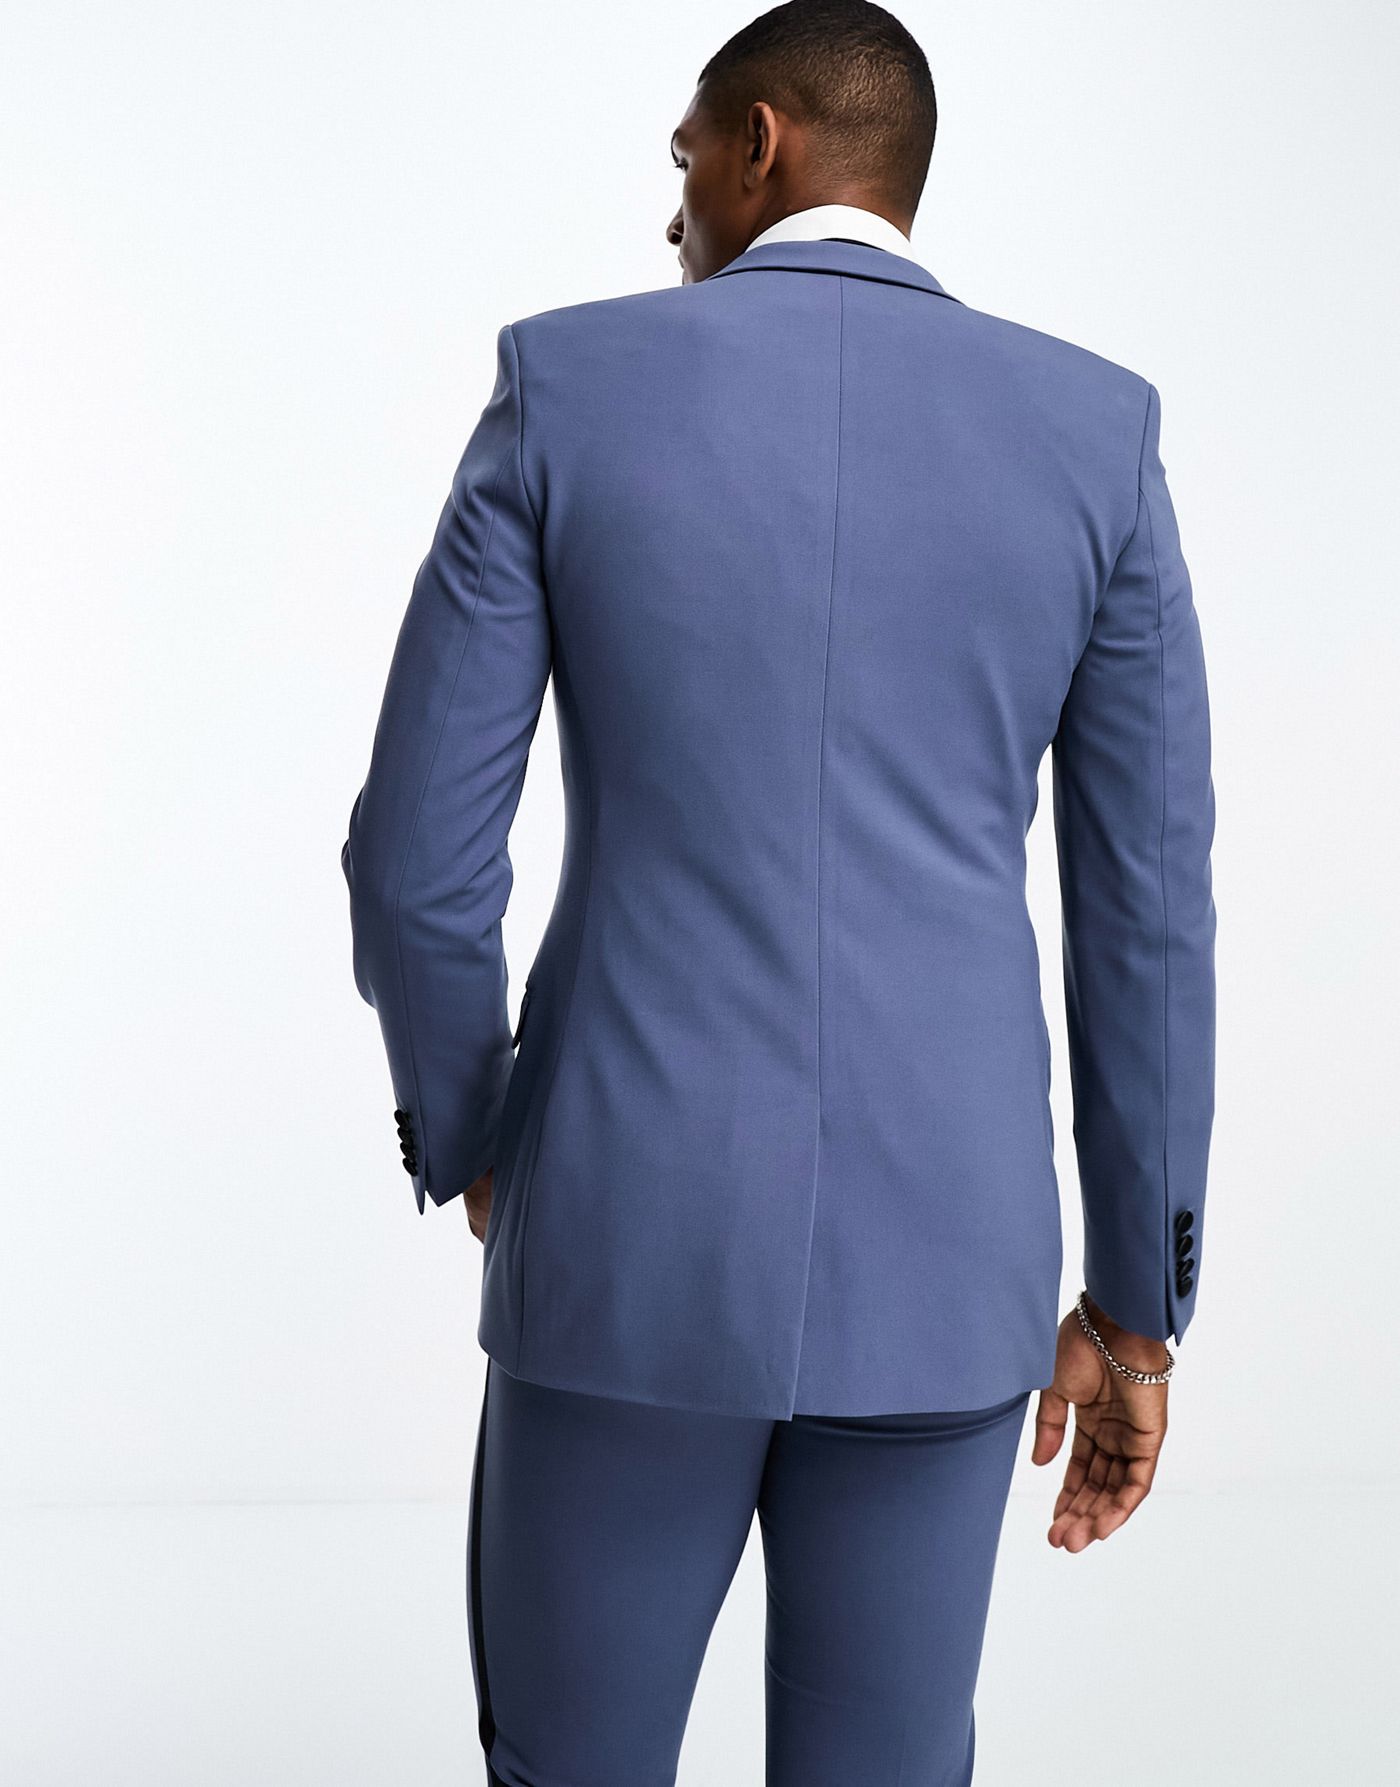 ASOS DESIGN super skinny tuxedo suit jacket in airforce blue